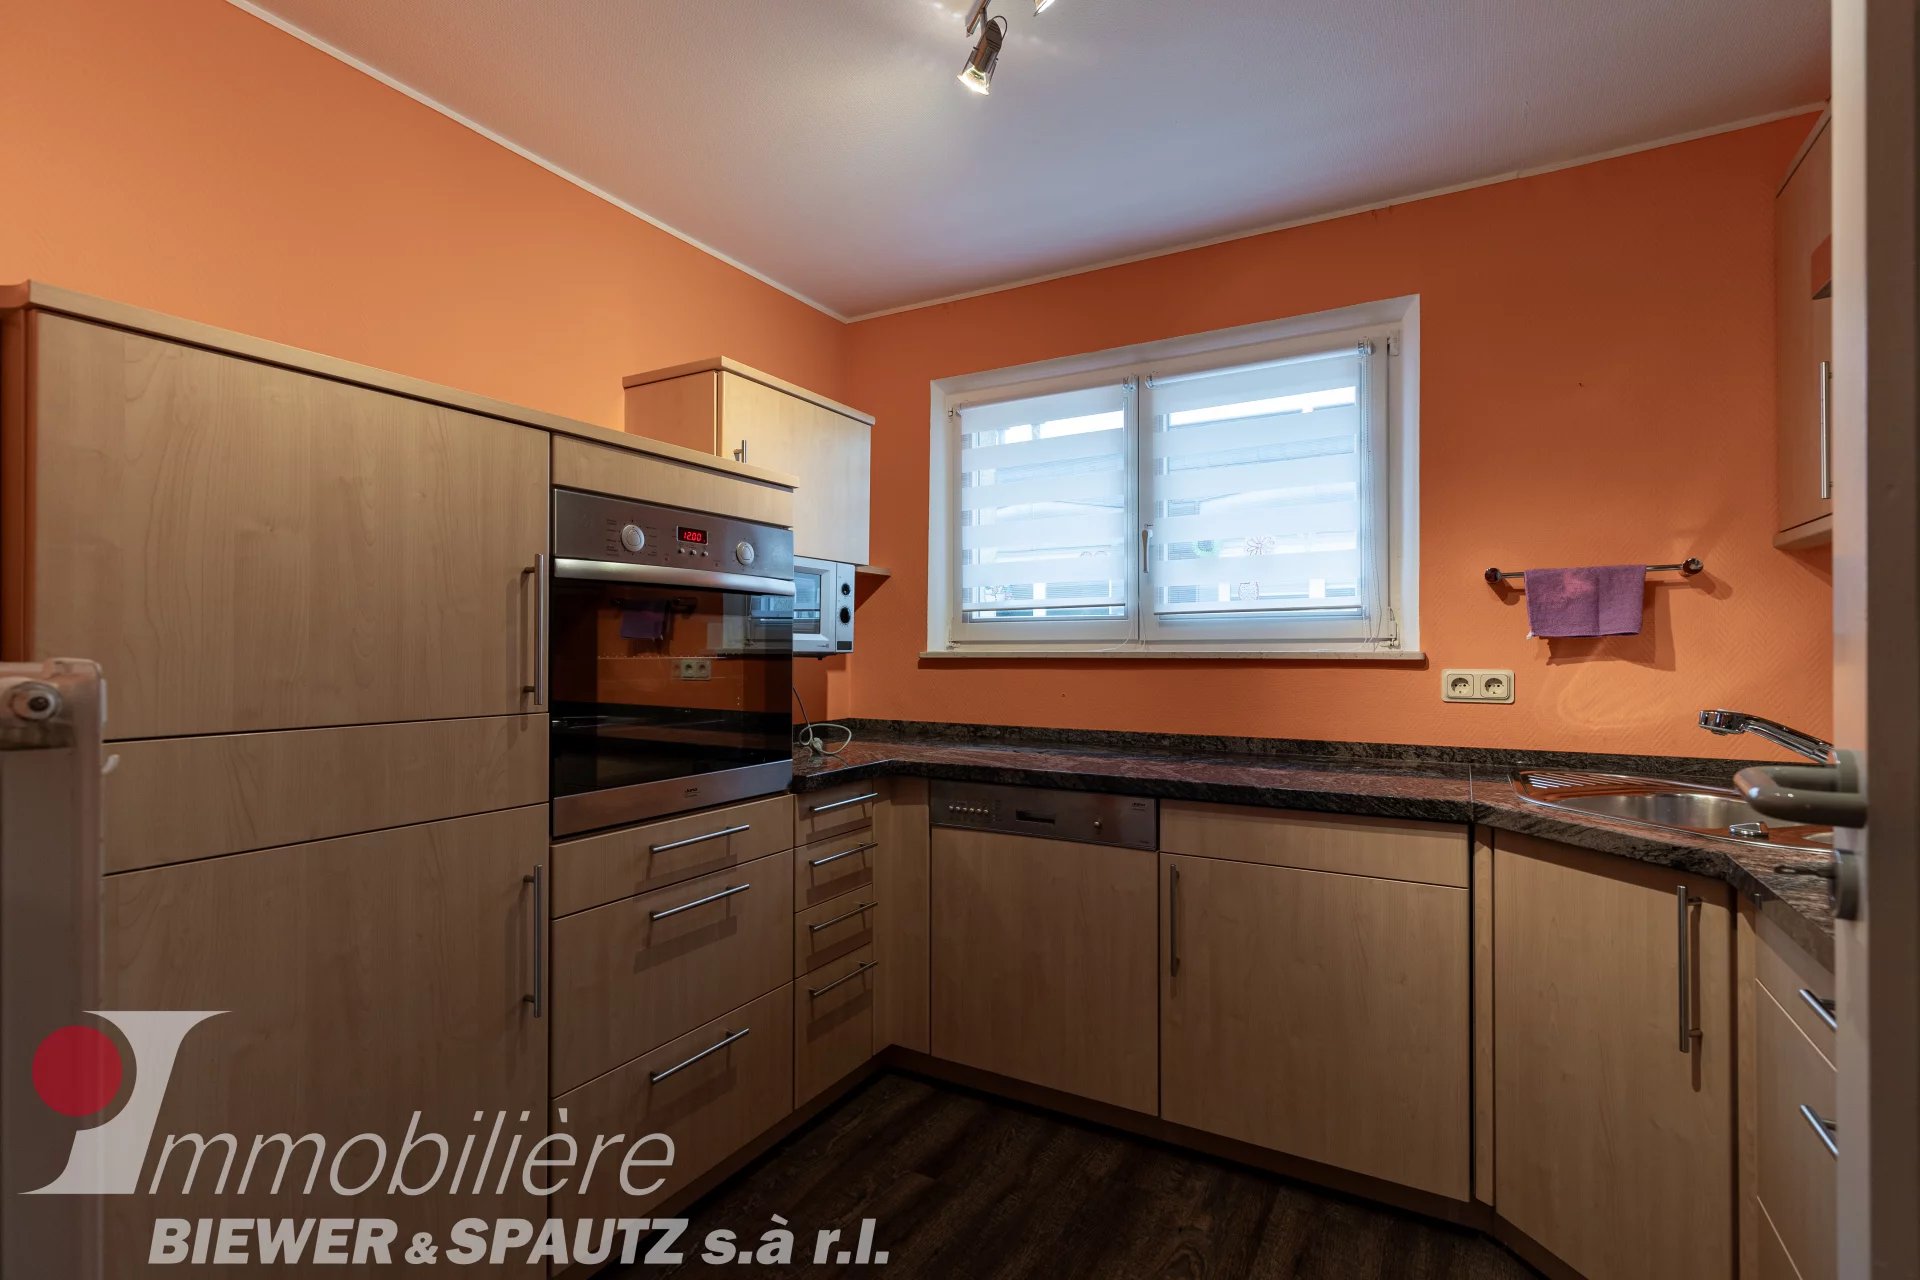 FOR SALE - 2 bedroom flat in Echternach